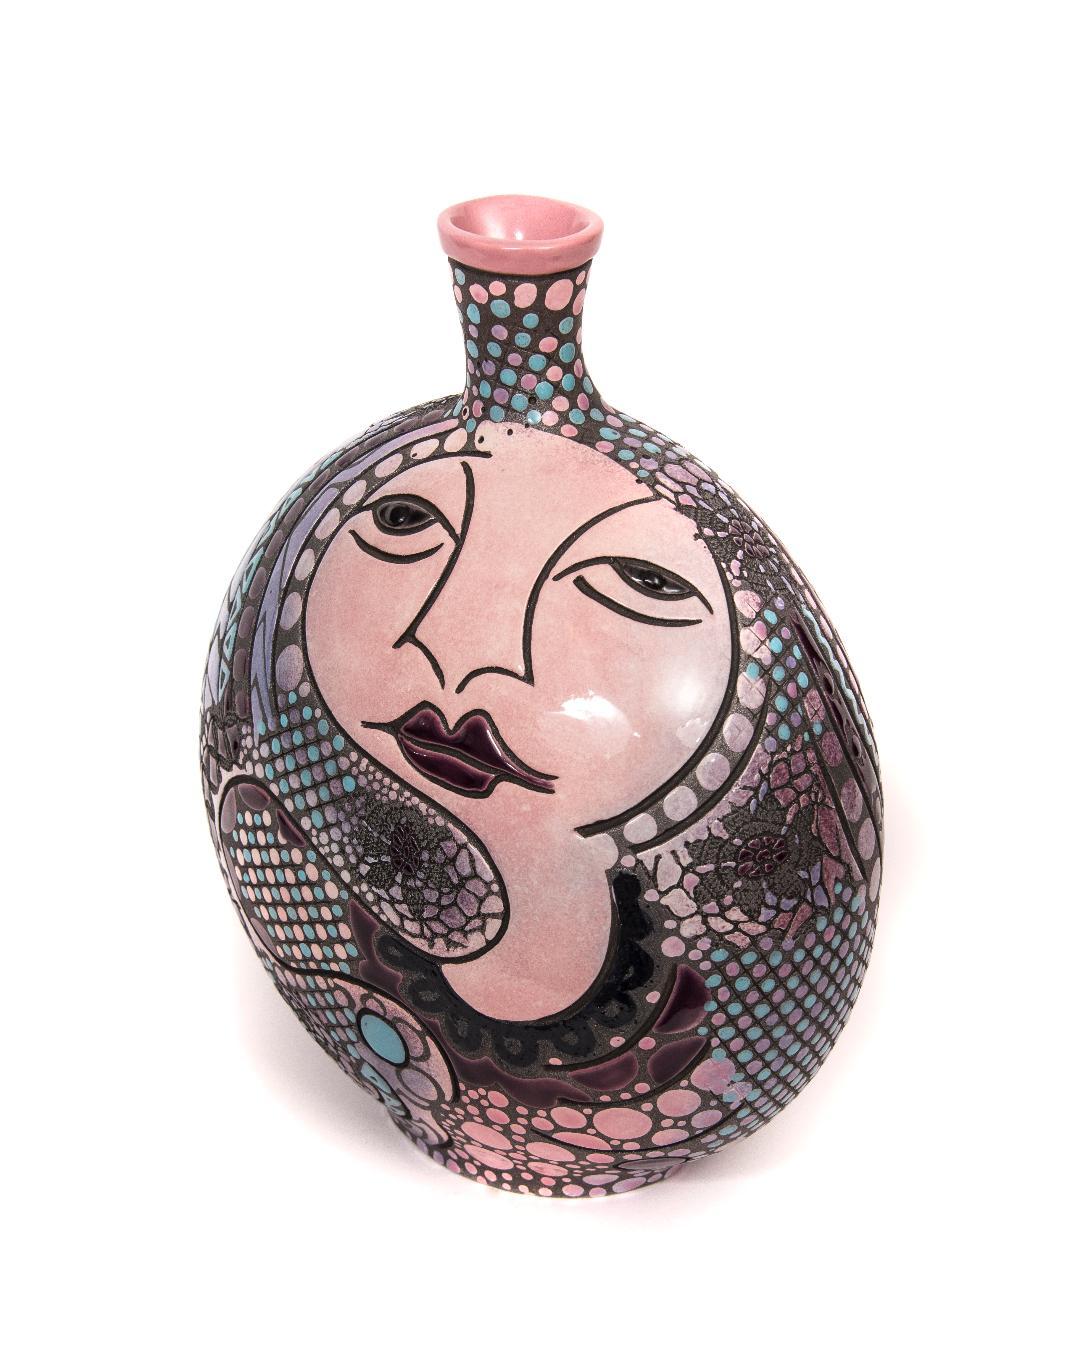 GEMINI - Abstract Slip Cast Ceramic Fine Art Sculpture Artist Signed 1994 For Sale 1